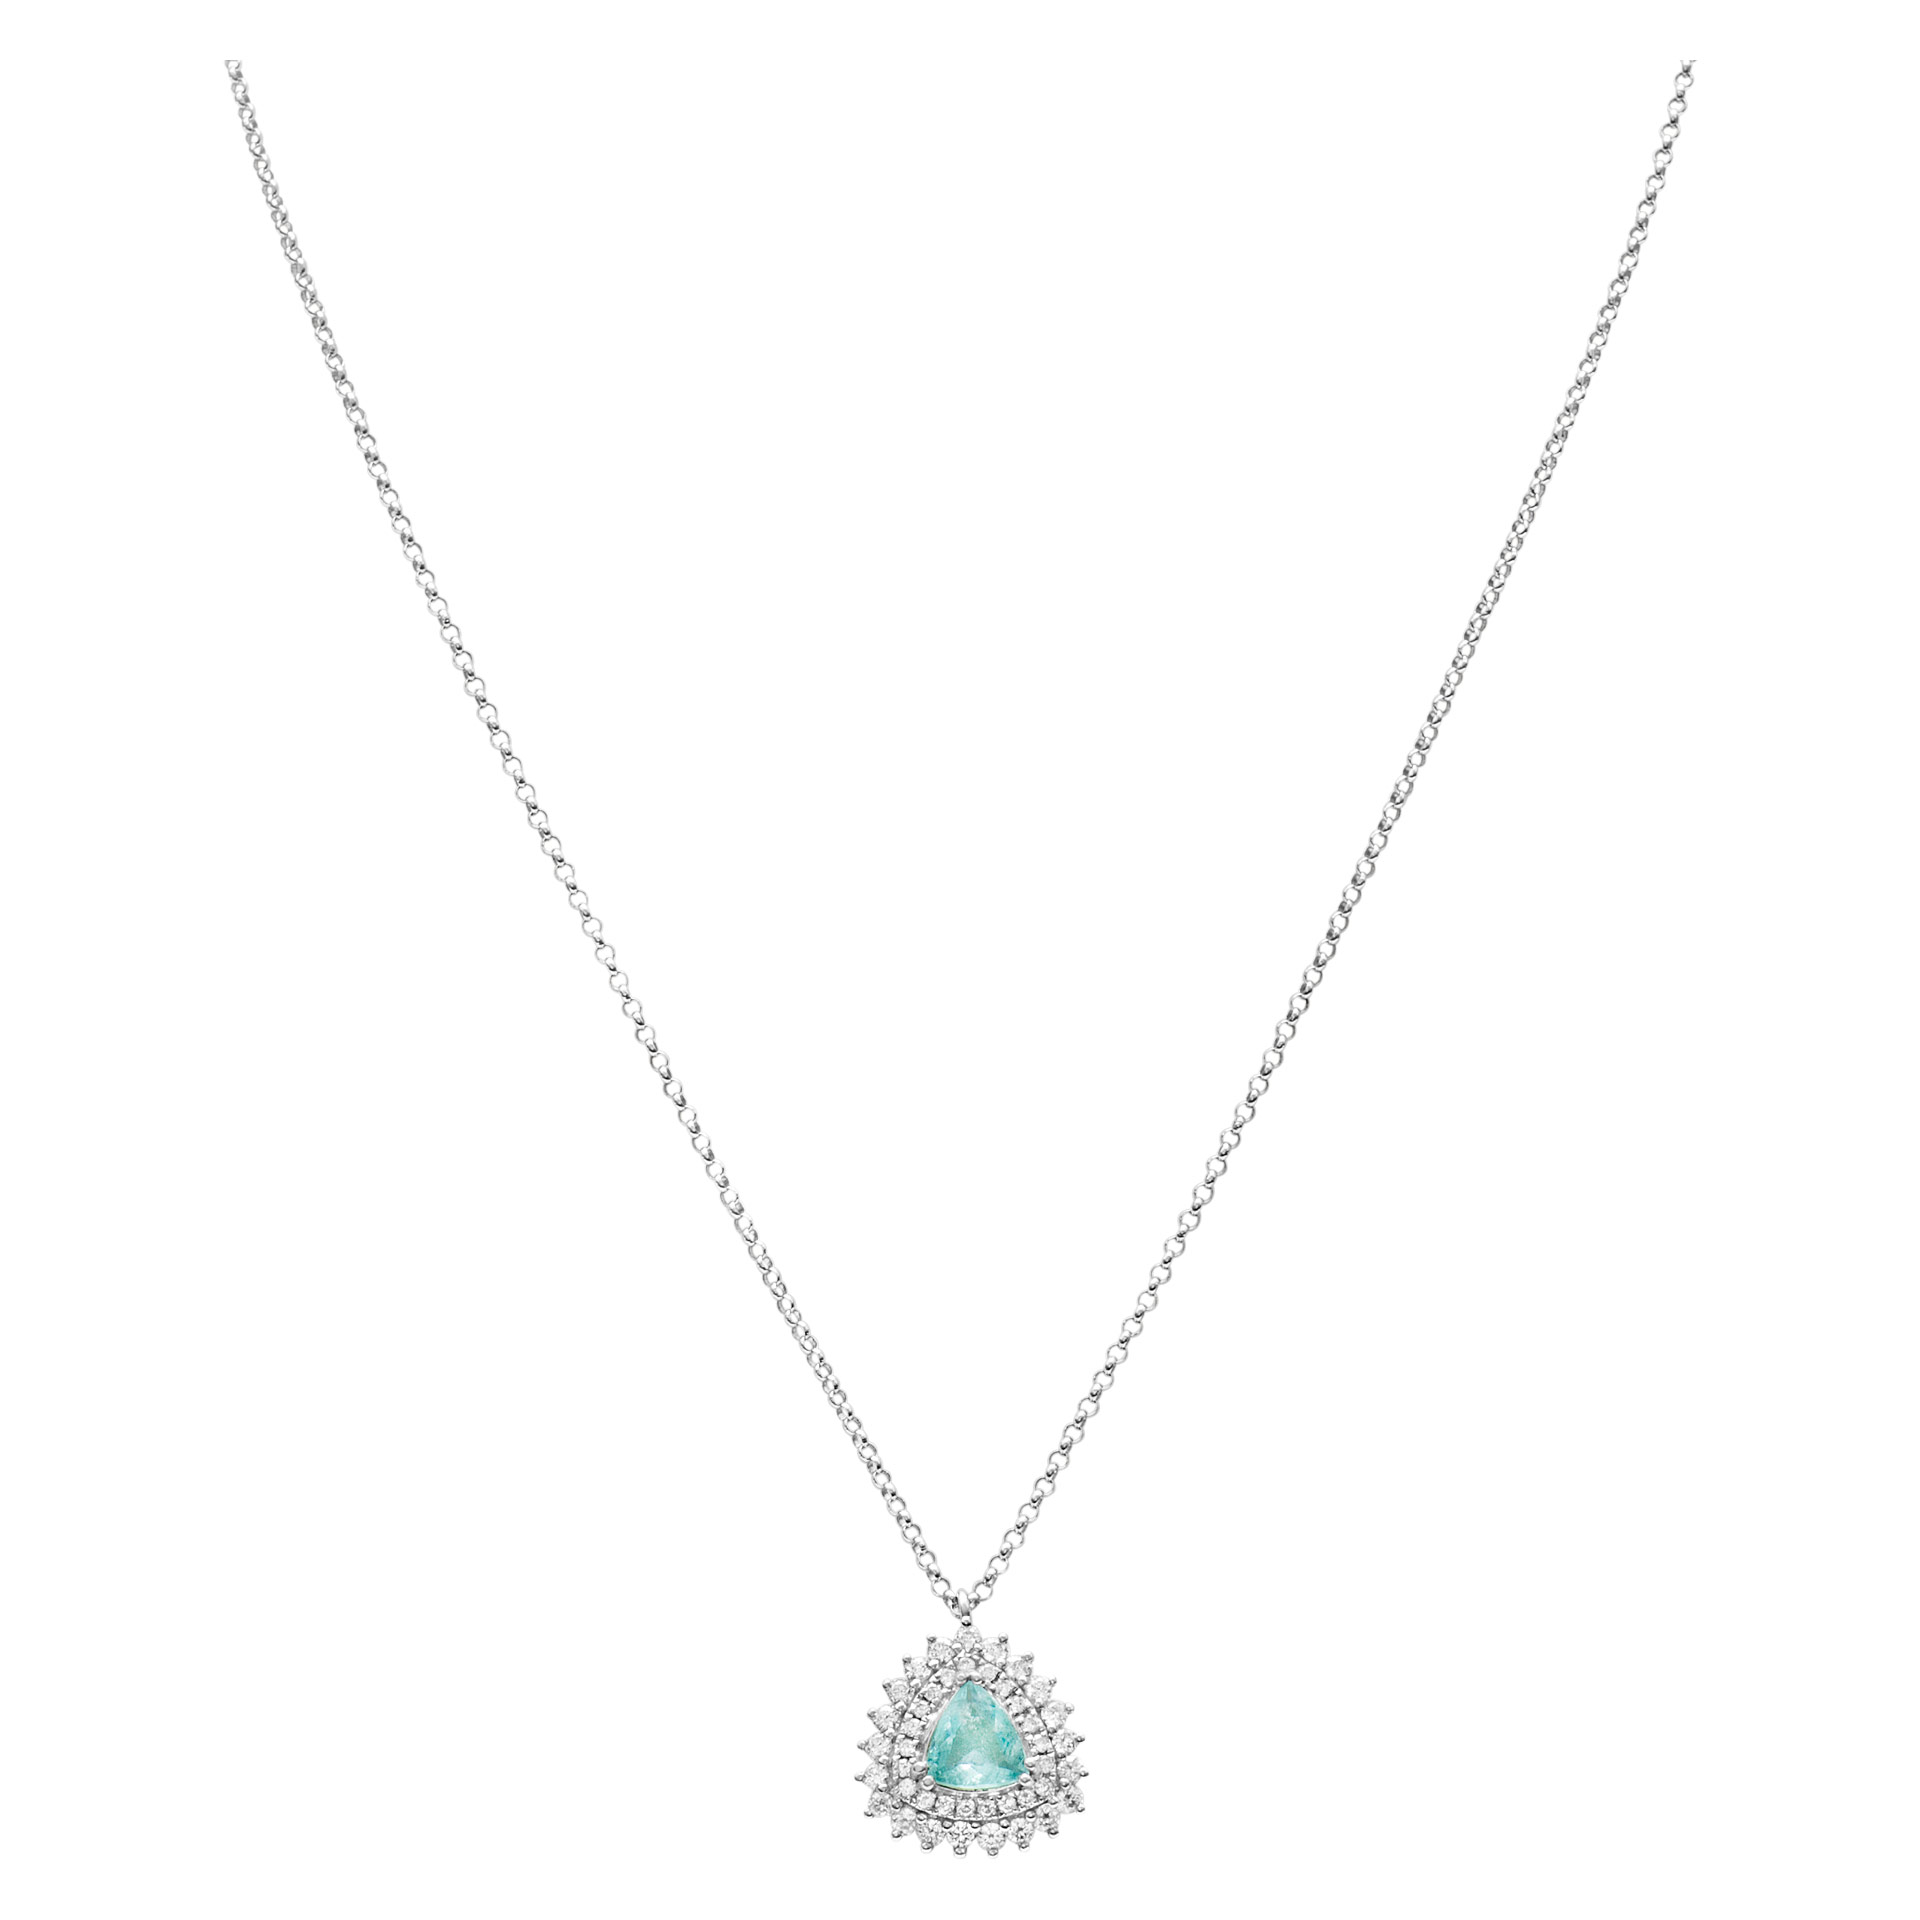 Sparkling tourmaline pendant necklace with diamonds image 2